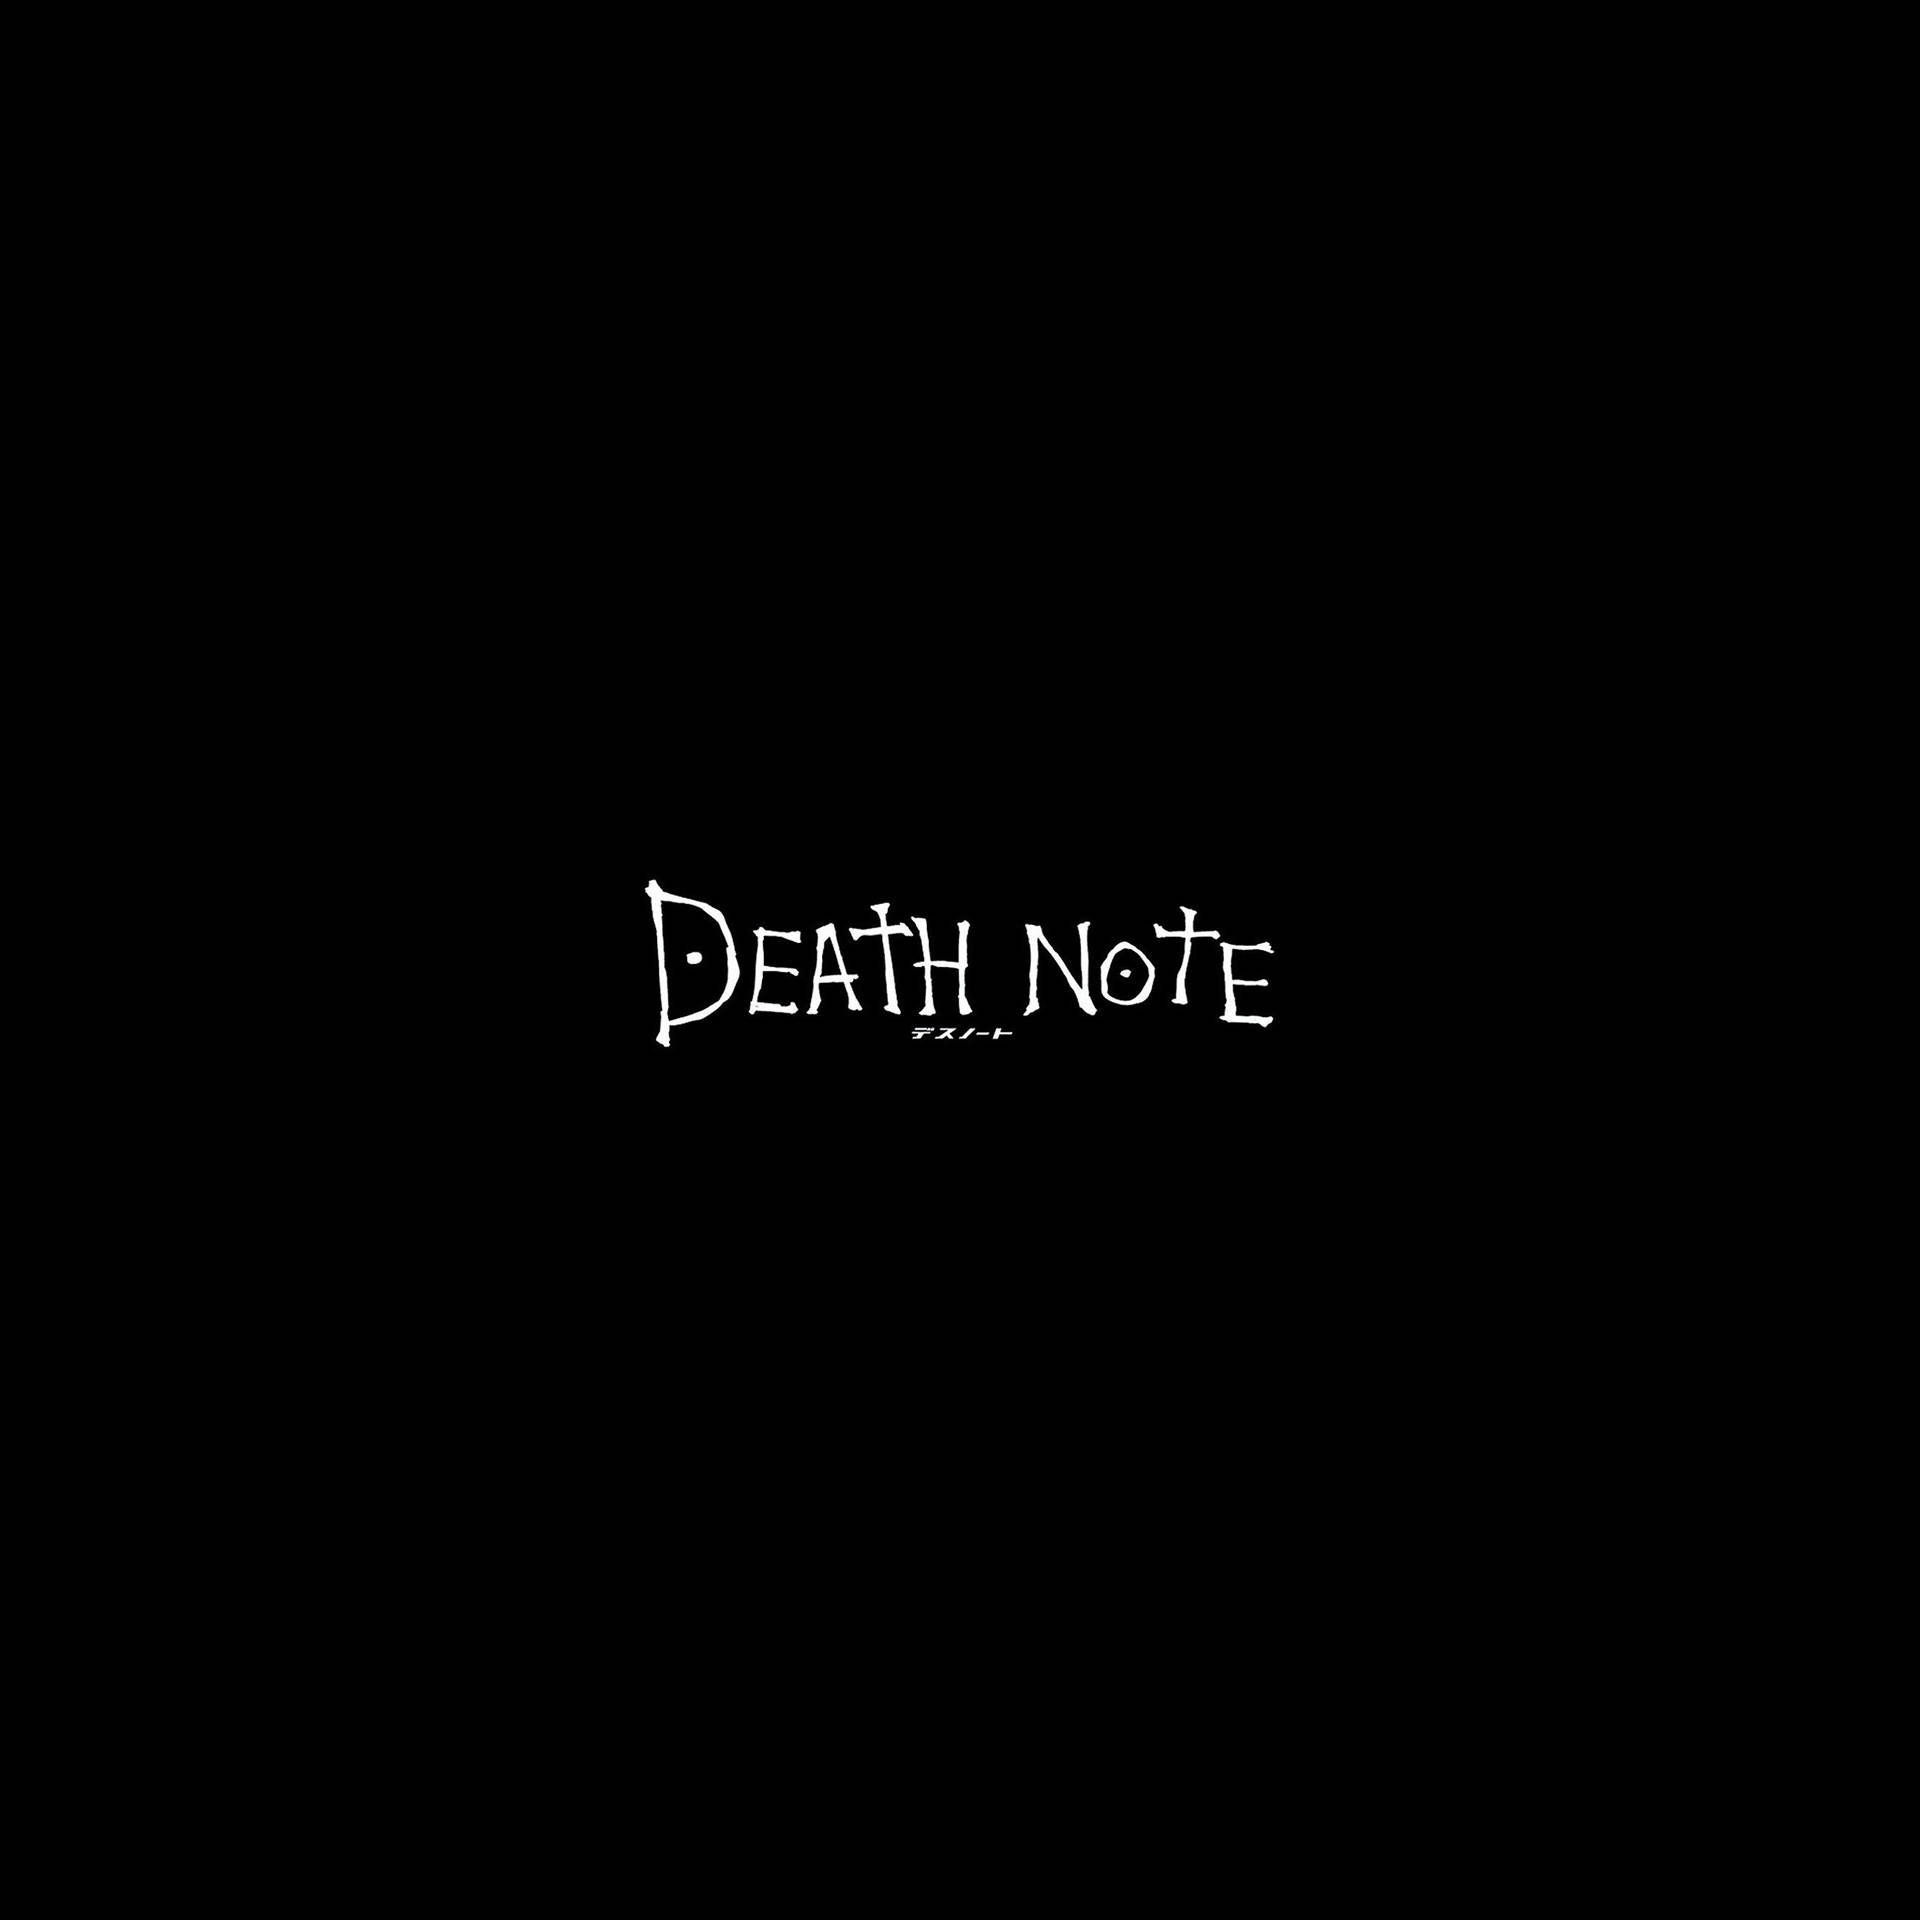 Artede Anime Apresentando A Série De Anime Favorita De Todos Os Fãs De Anime - Death Note. Papel de Parede